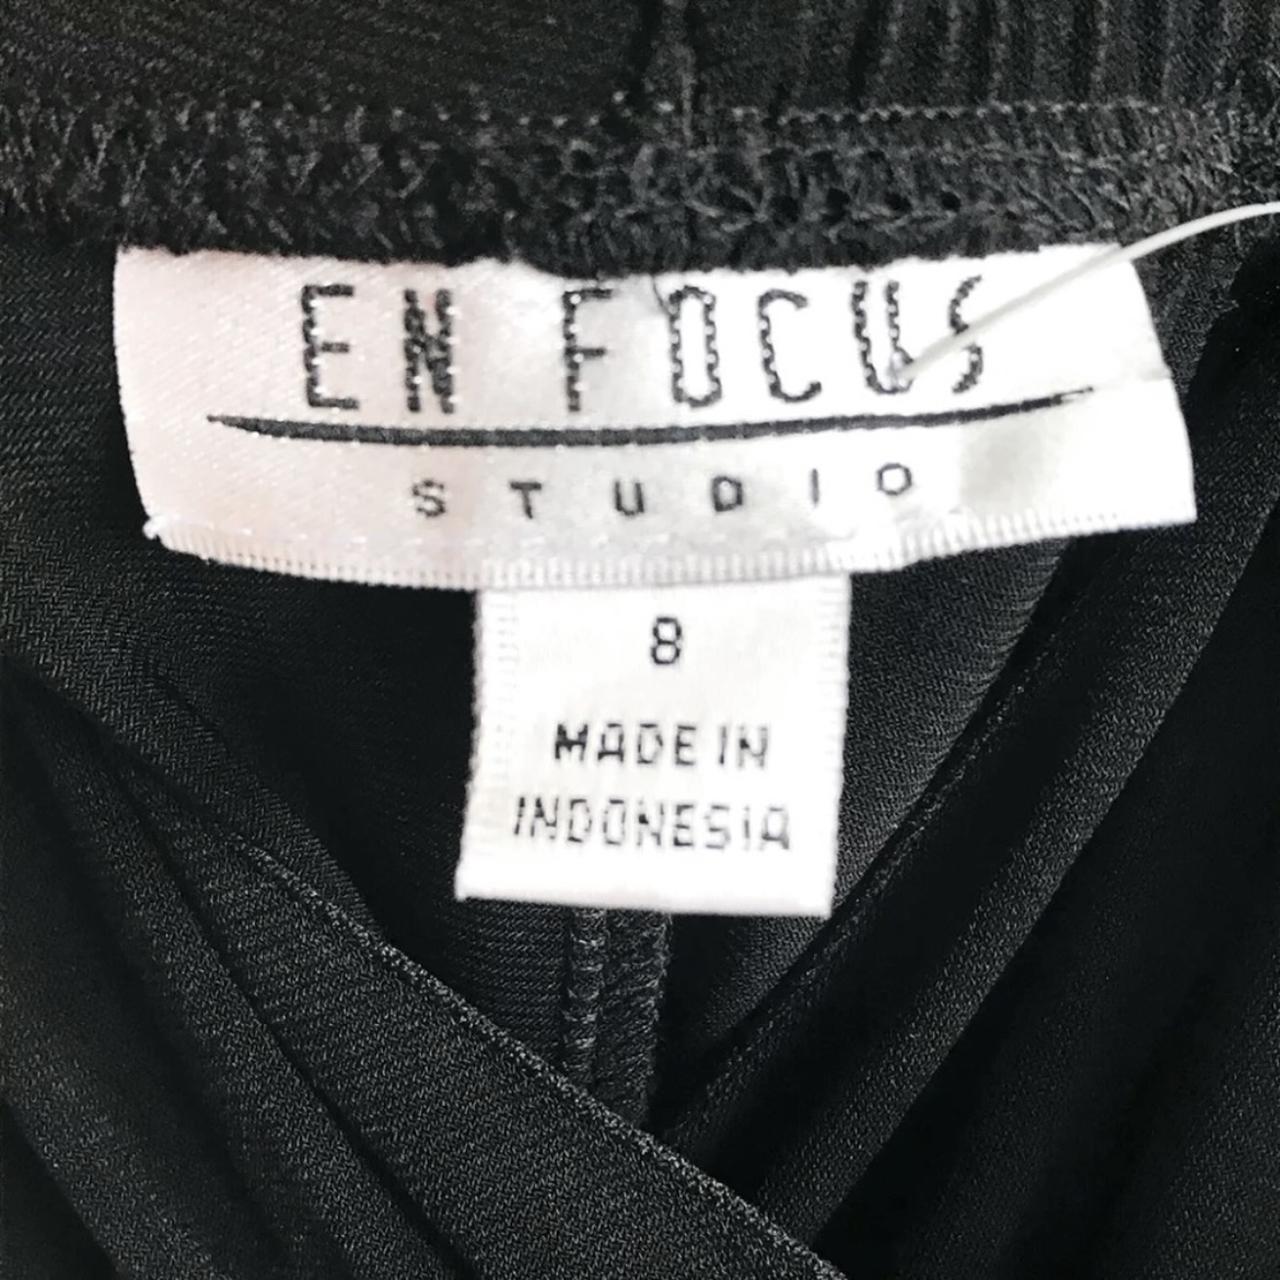 Enfocus Studio Women's Black and Tan Dress (3)